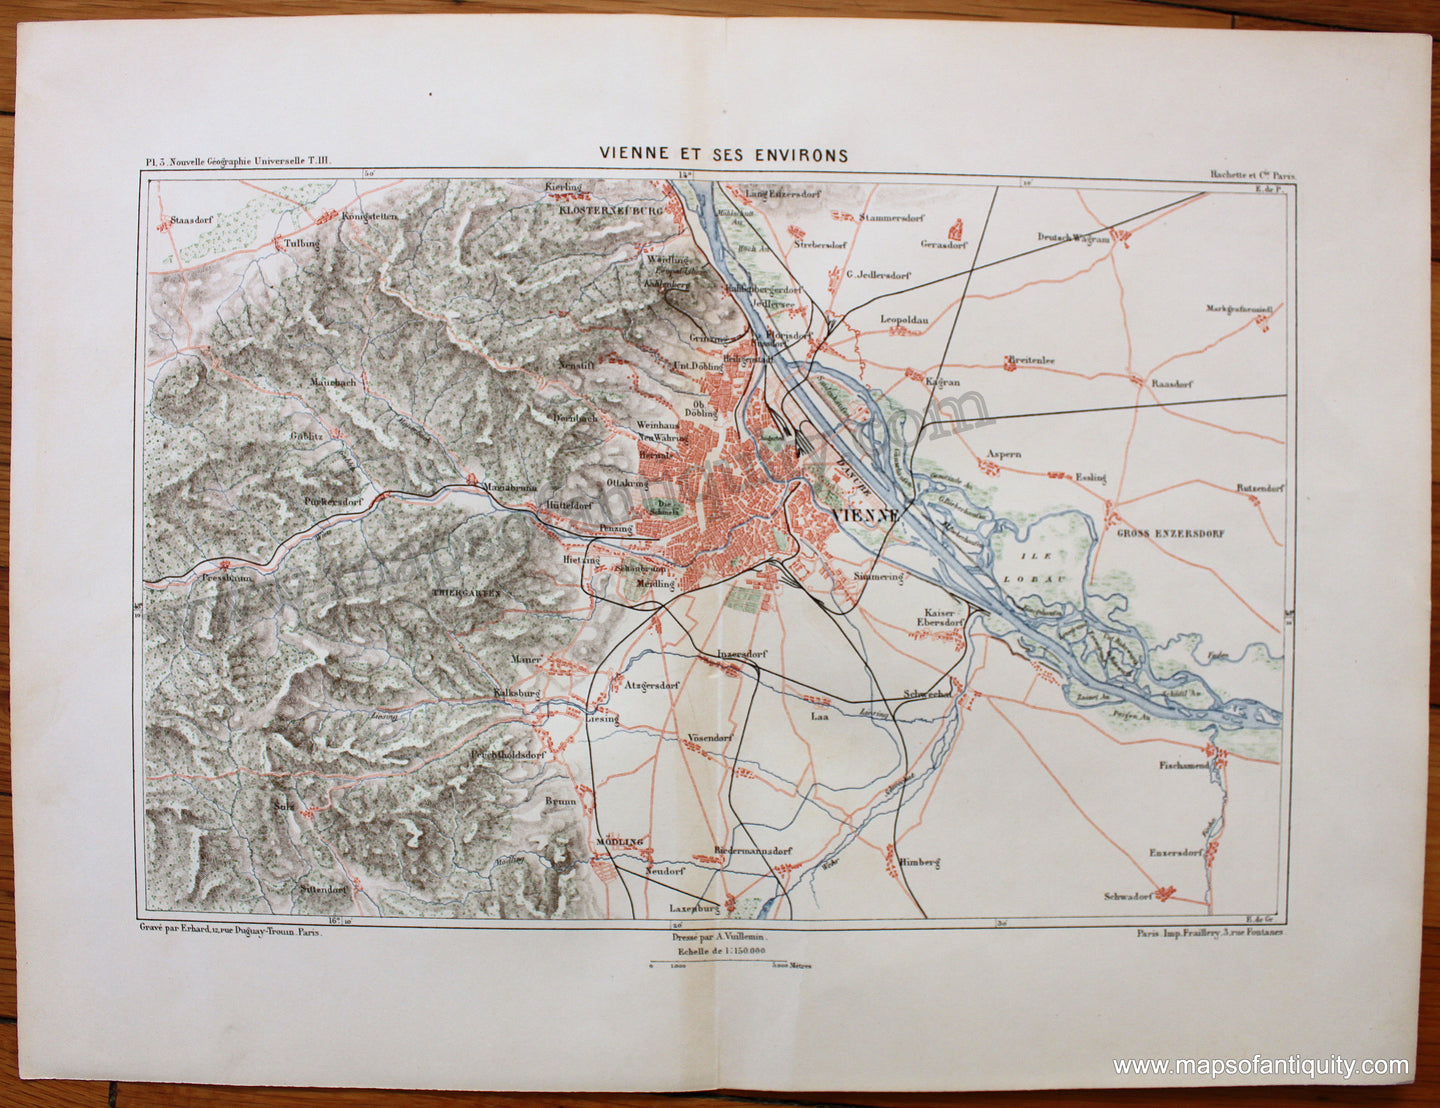 Antique-Printed-Color-Map-Vienna-Vienne-et-ses-Environs-c.-1900-Austria-Vienna-1800s-19th-century-Maps-of-Antiquity